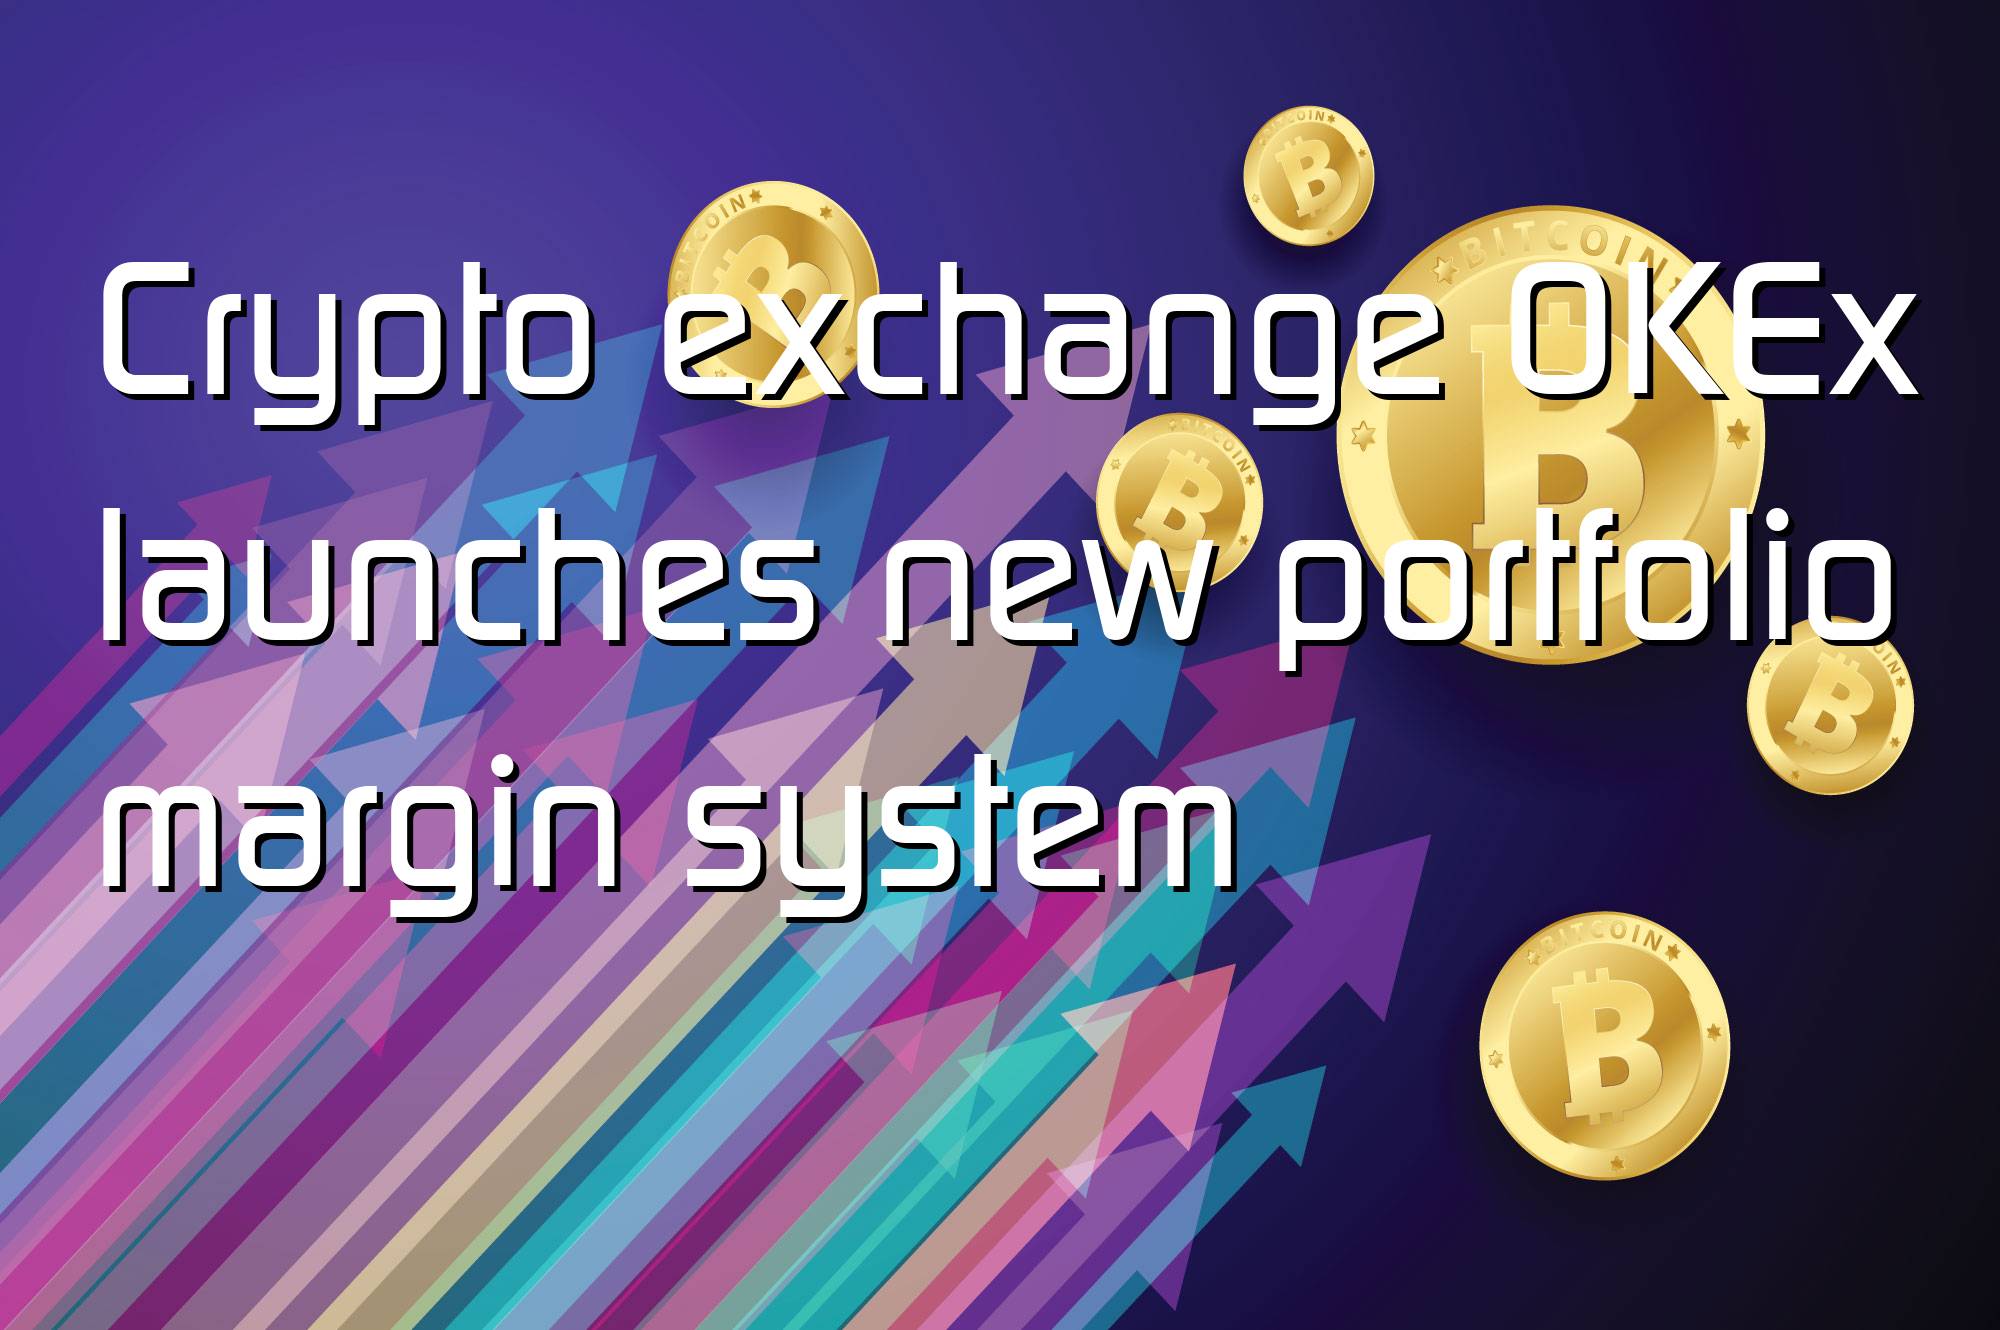 @$61566: Crypto exchange OKEx launches new portfolio margin system